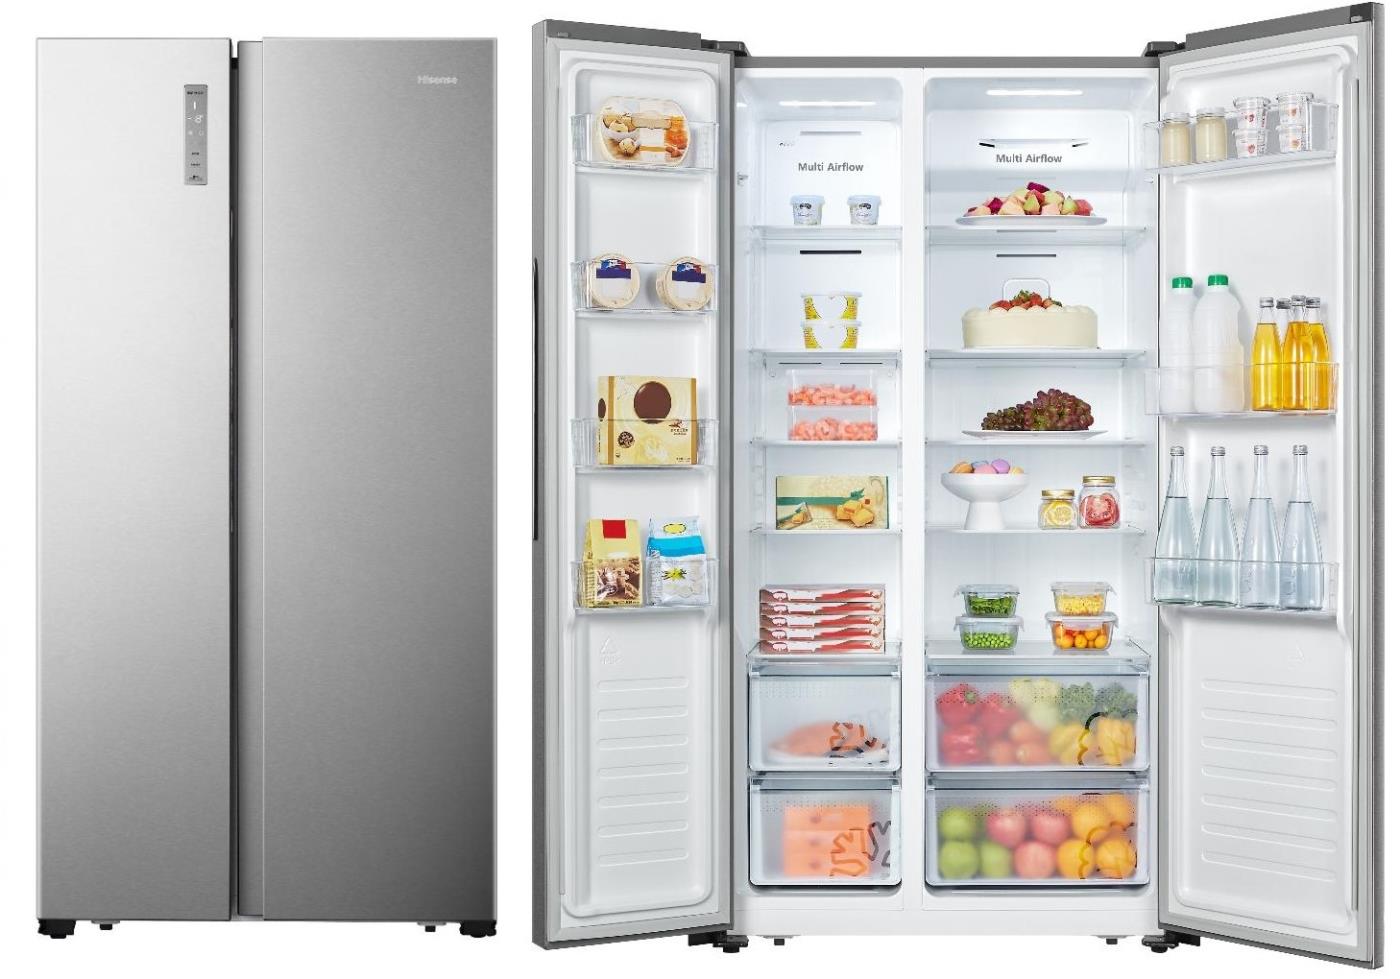 Холодильник Hisense RS677N4AC1